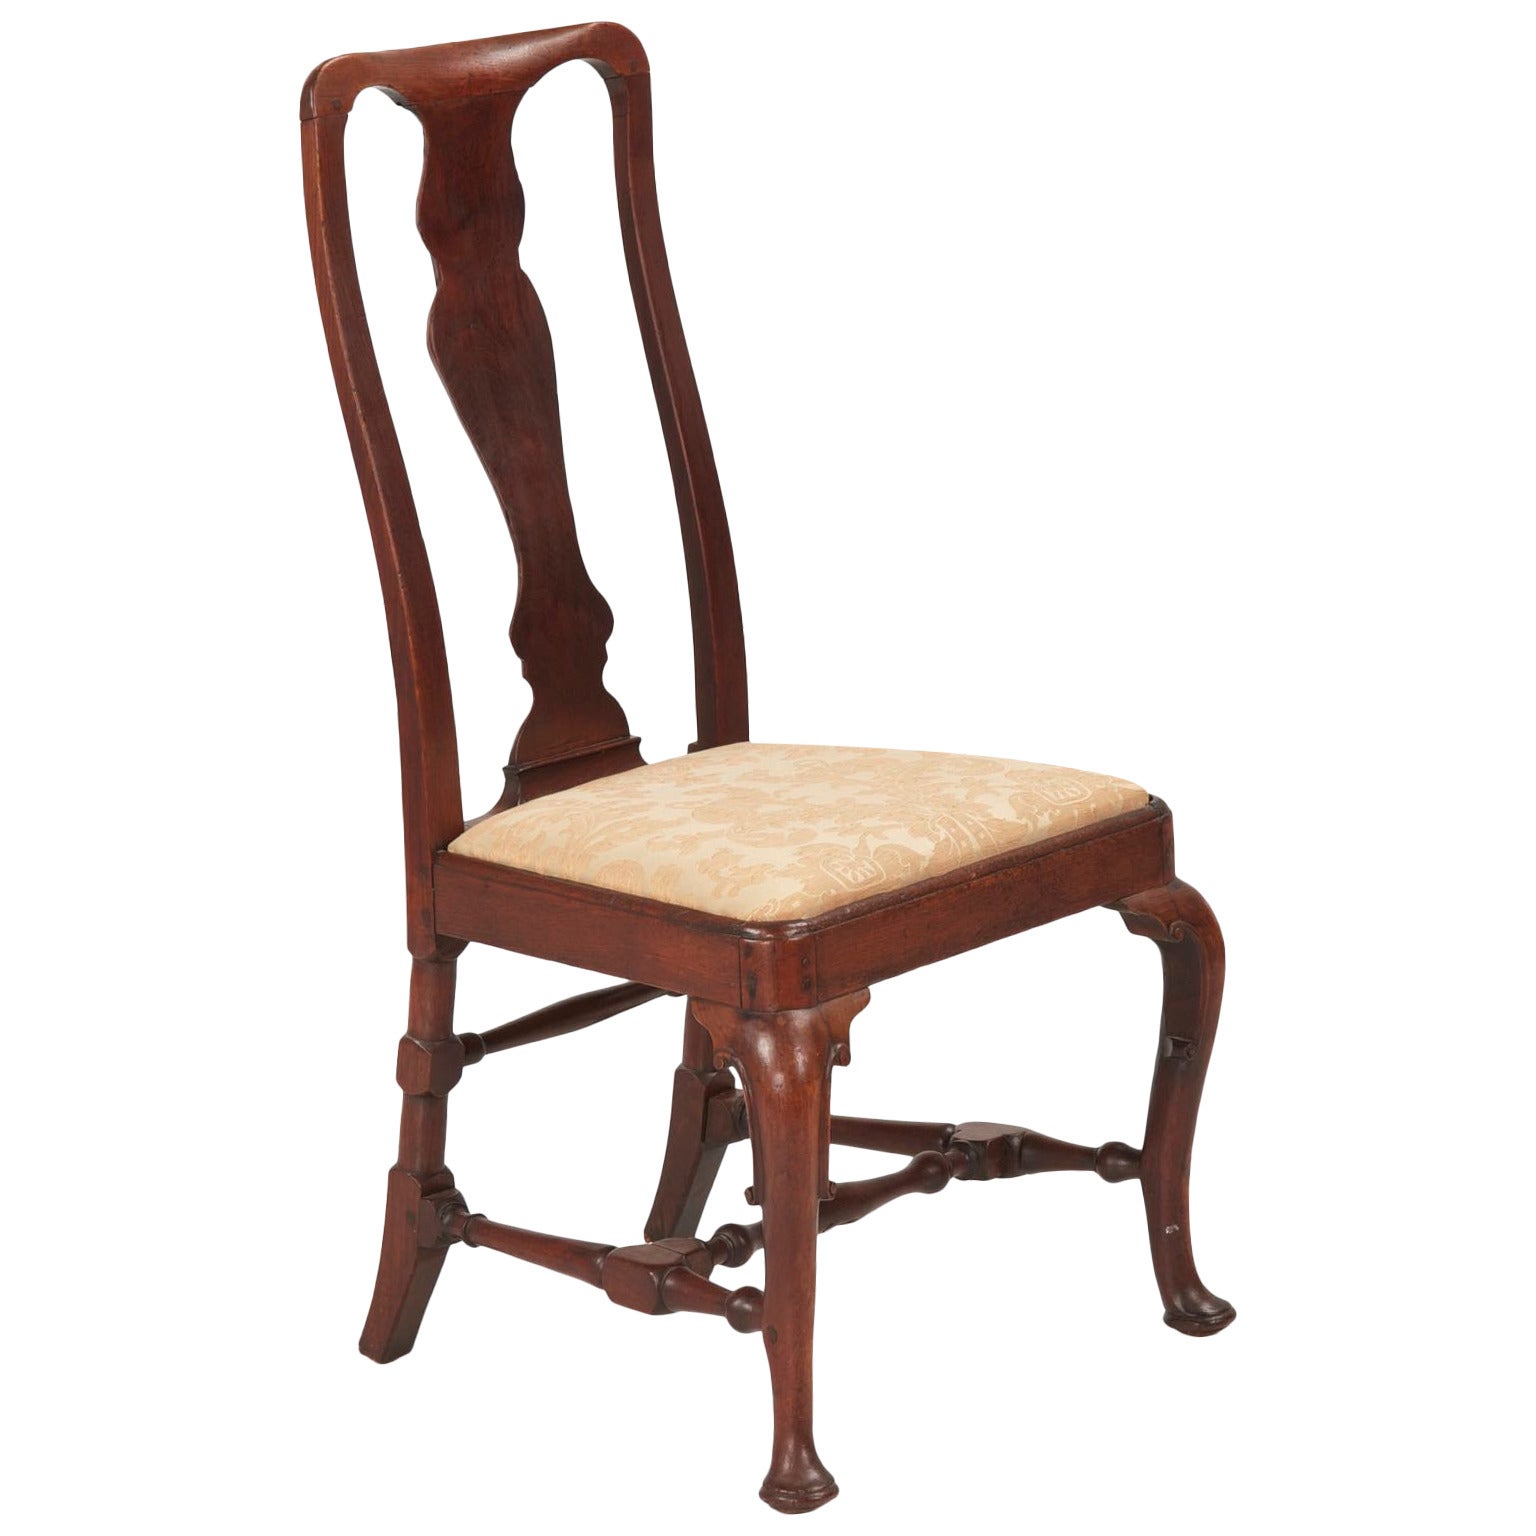 Queen Anne Walnut Antique Side Chair, circa 1725-1740